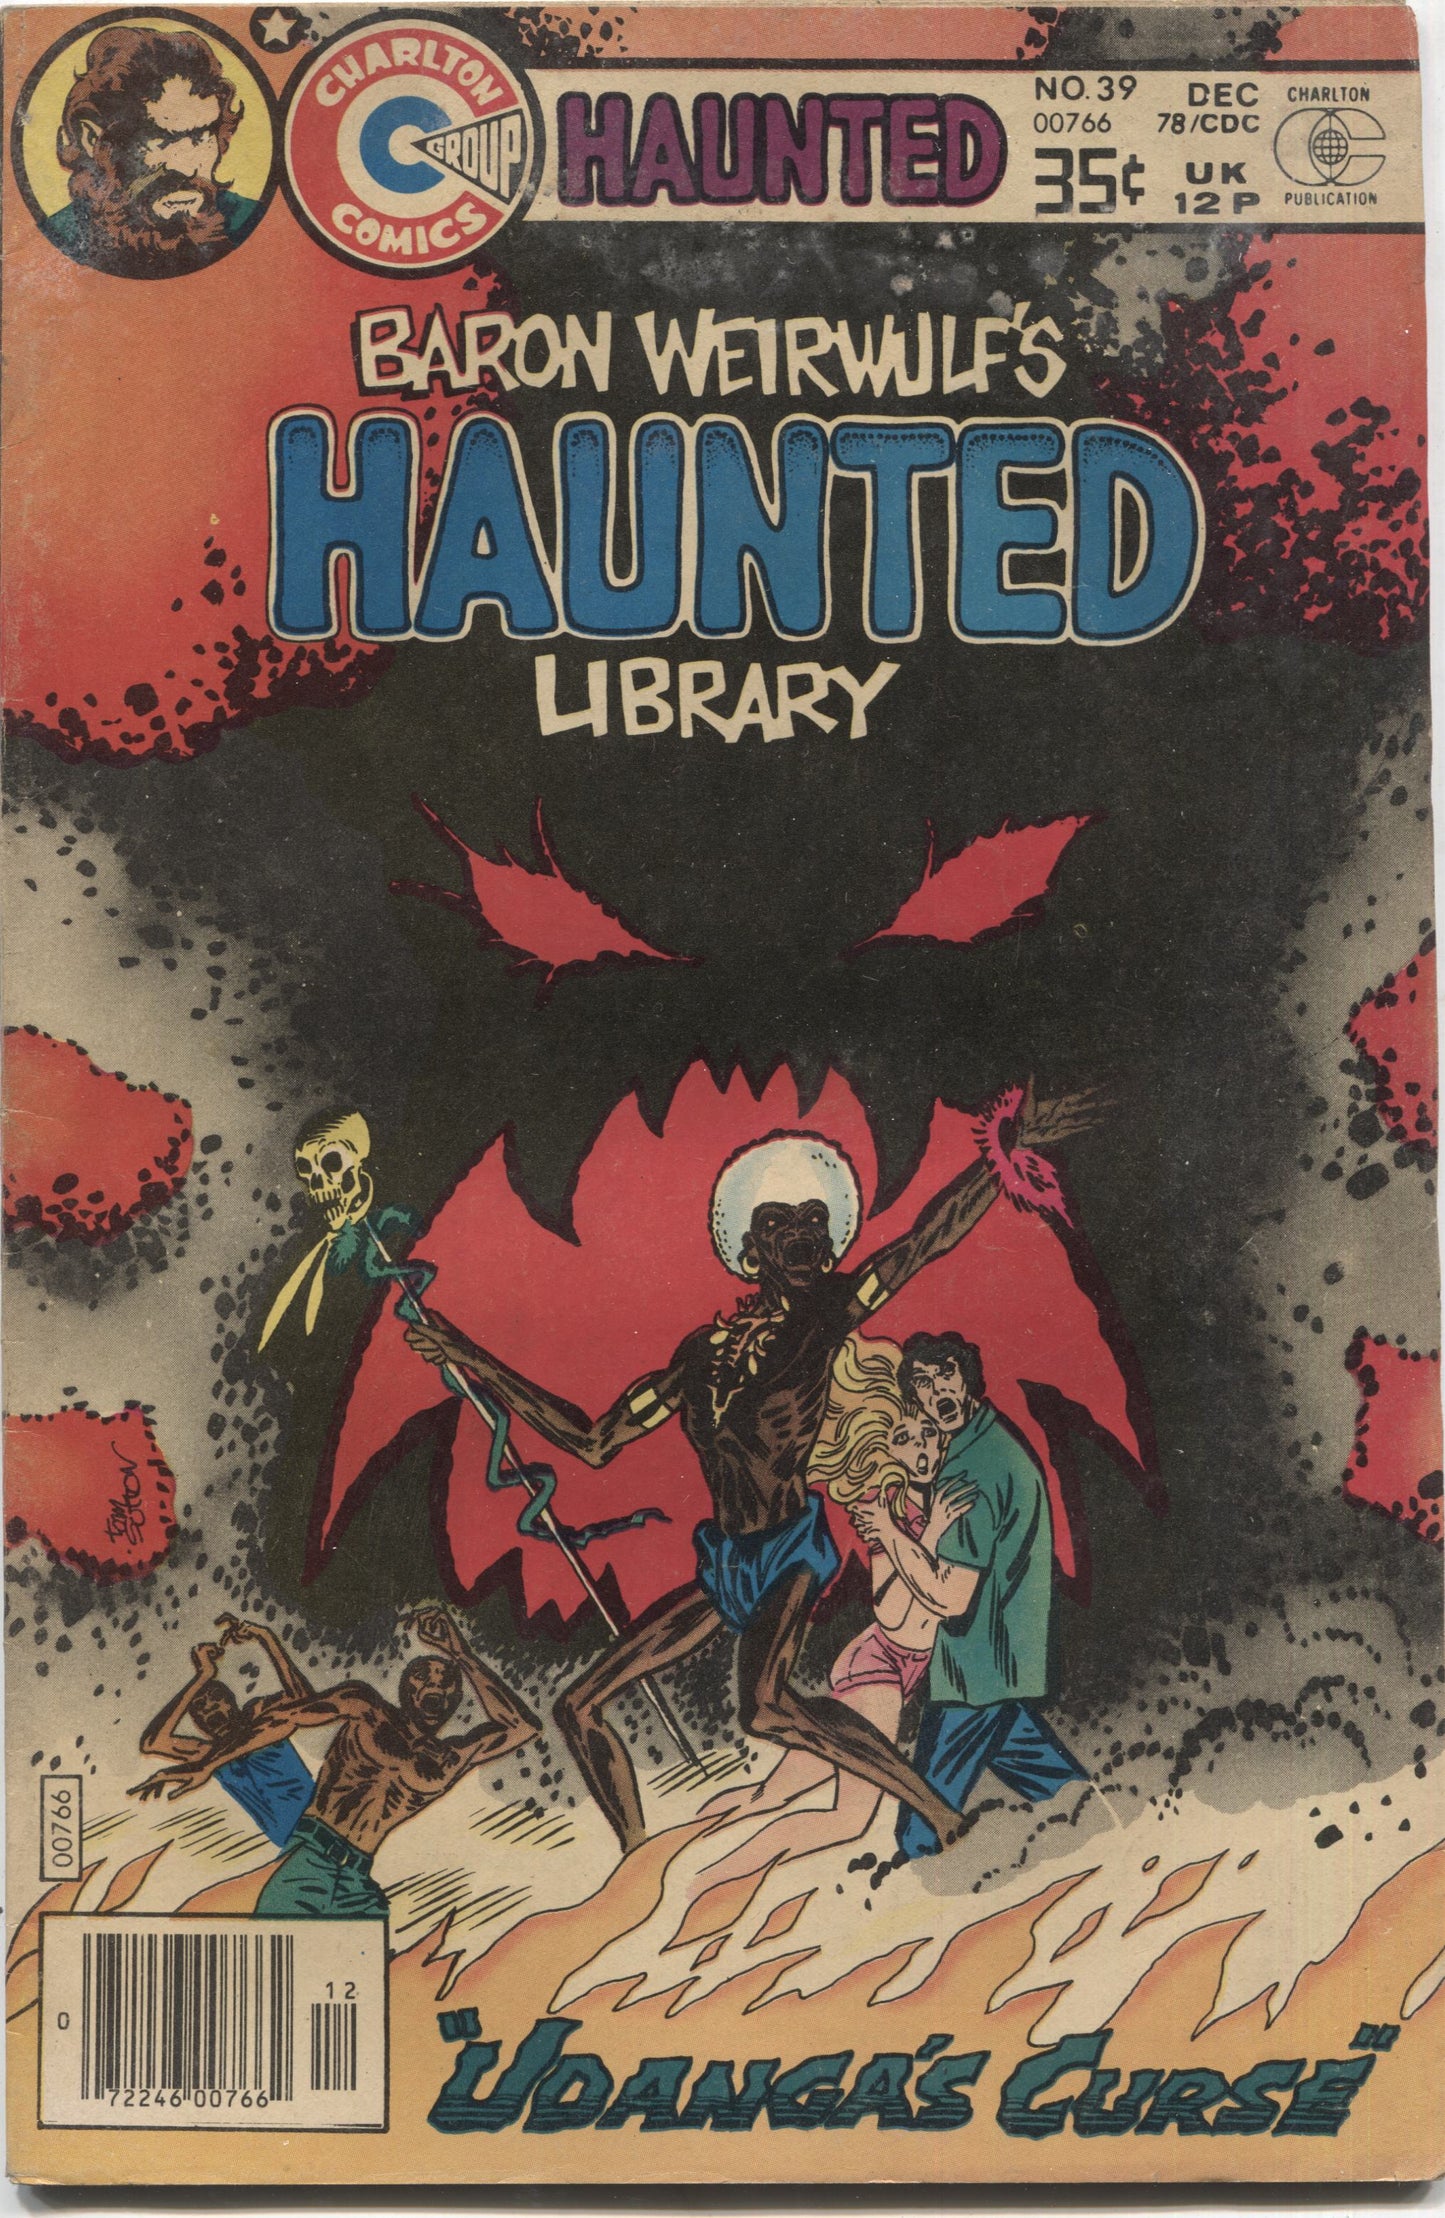 Haunted No. 39, "Udanga's Curse," Charlton Comics, December 1978